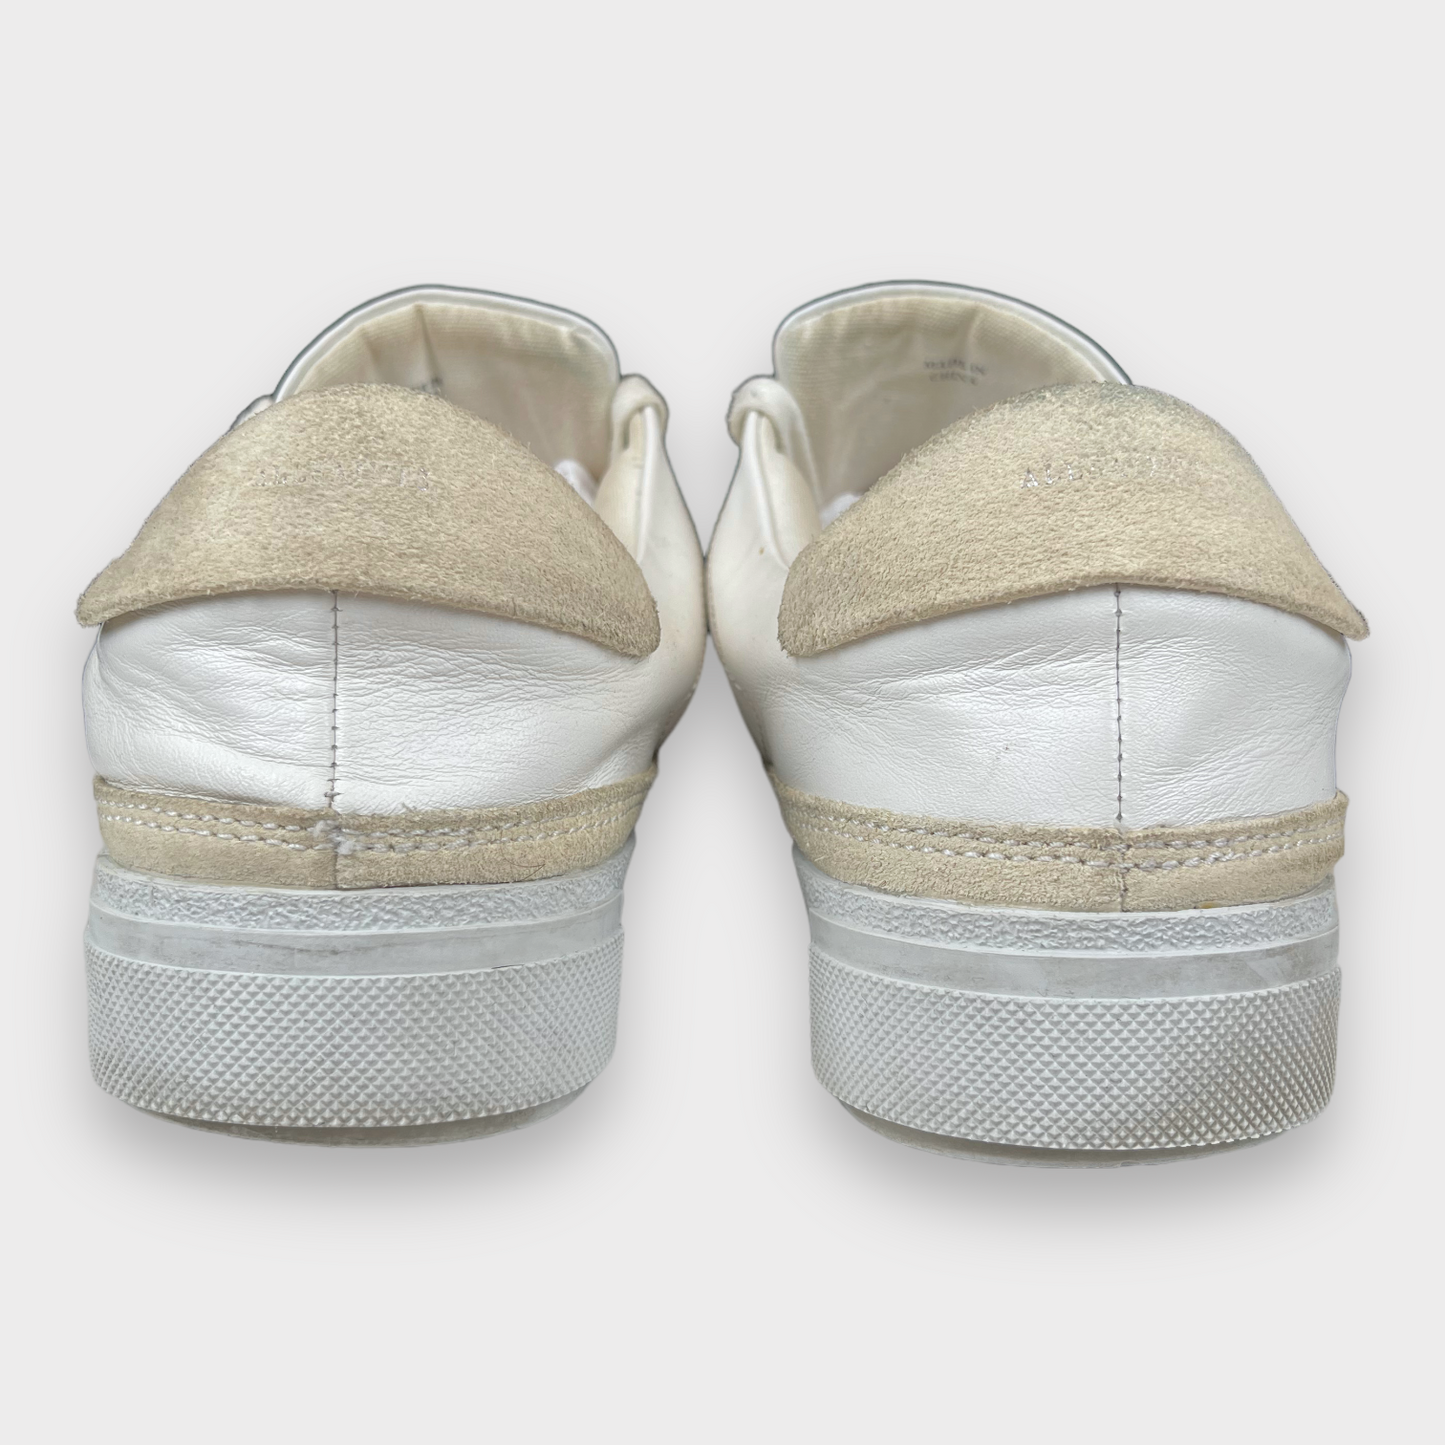 All Saints Trish Platform Low Top White Sneakers Women's Shoe Size 40 (10 US)